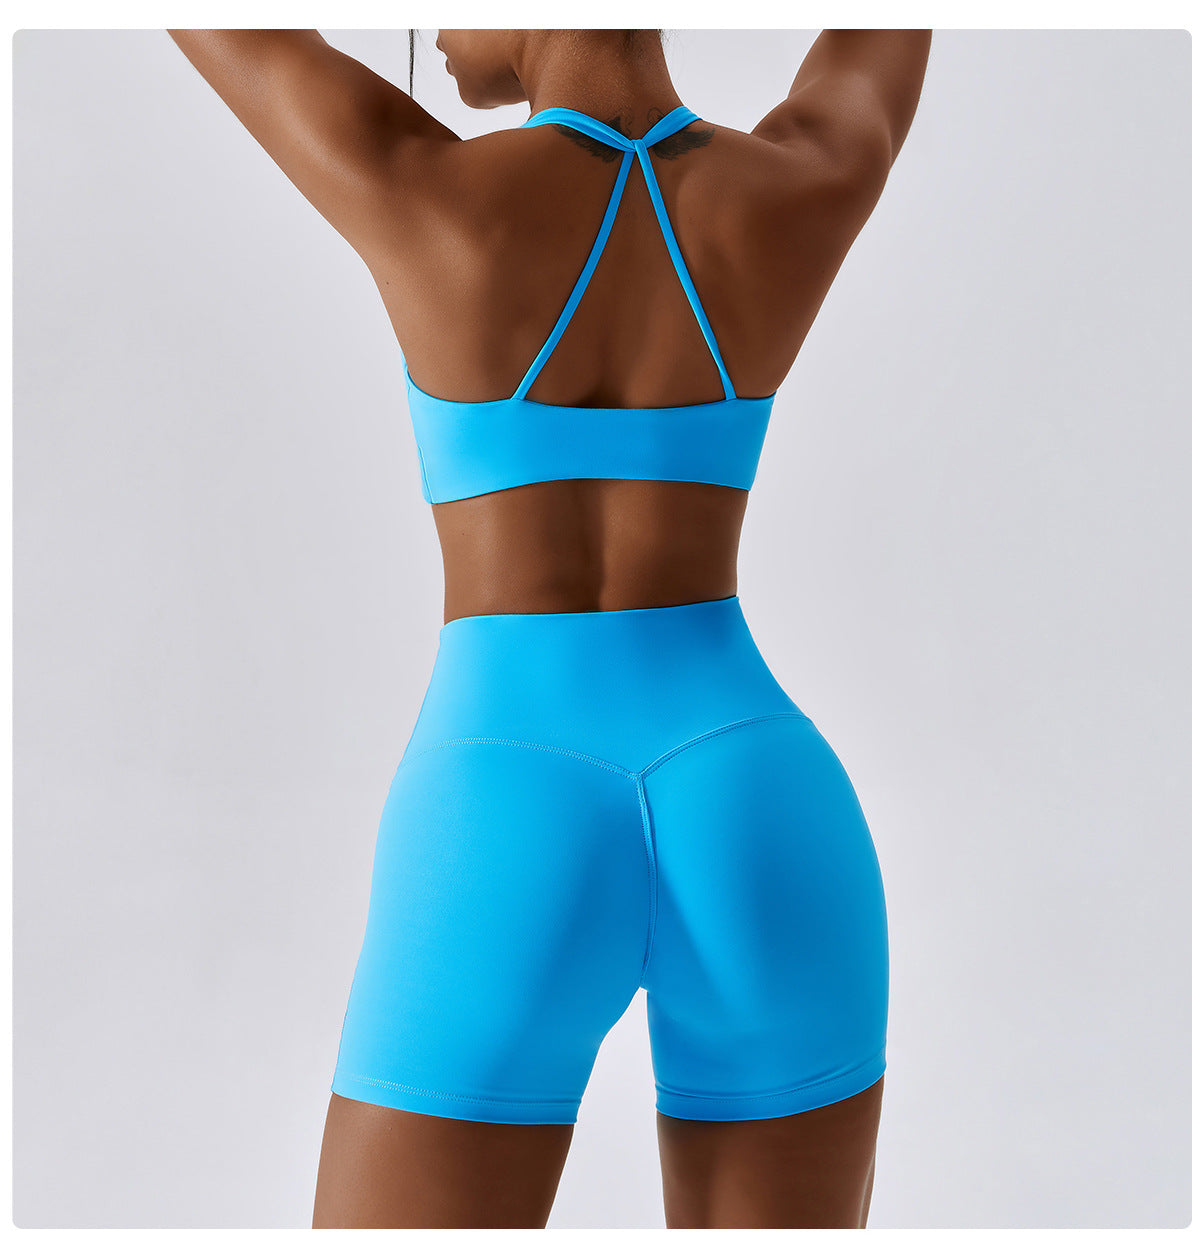 yoga clothing women's sports yoga bra running fitness underwear BWX8013